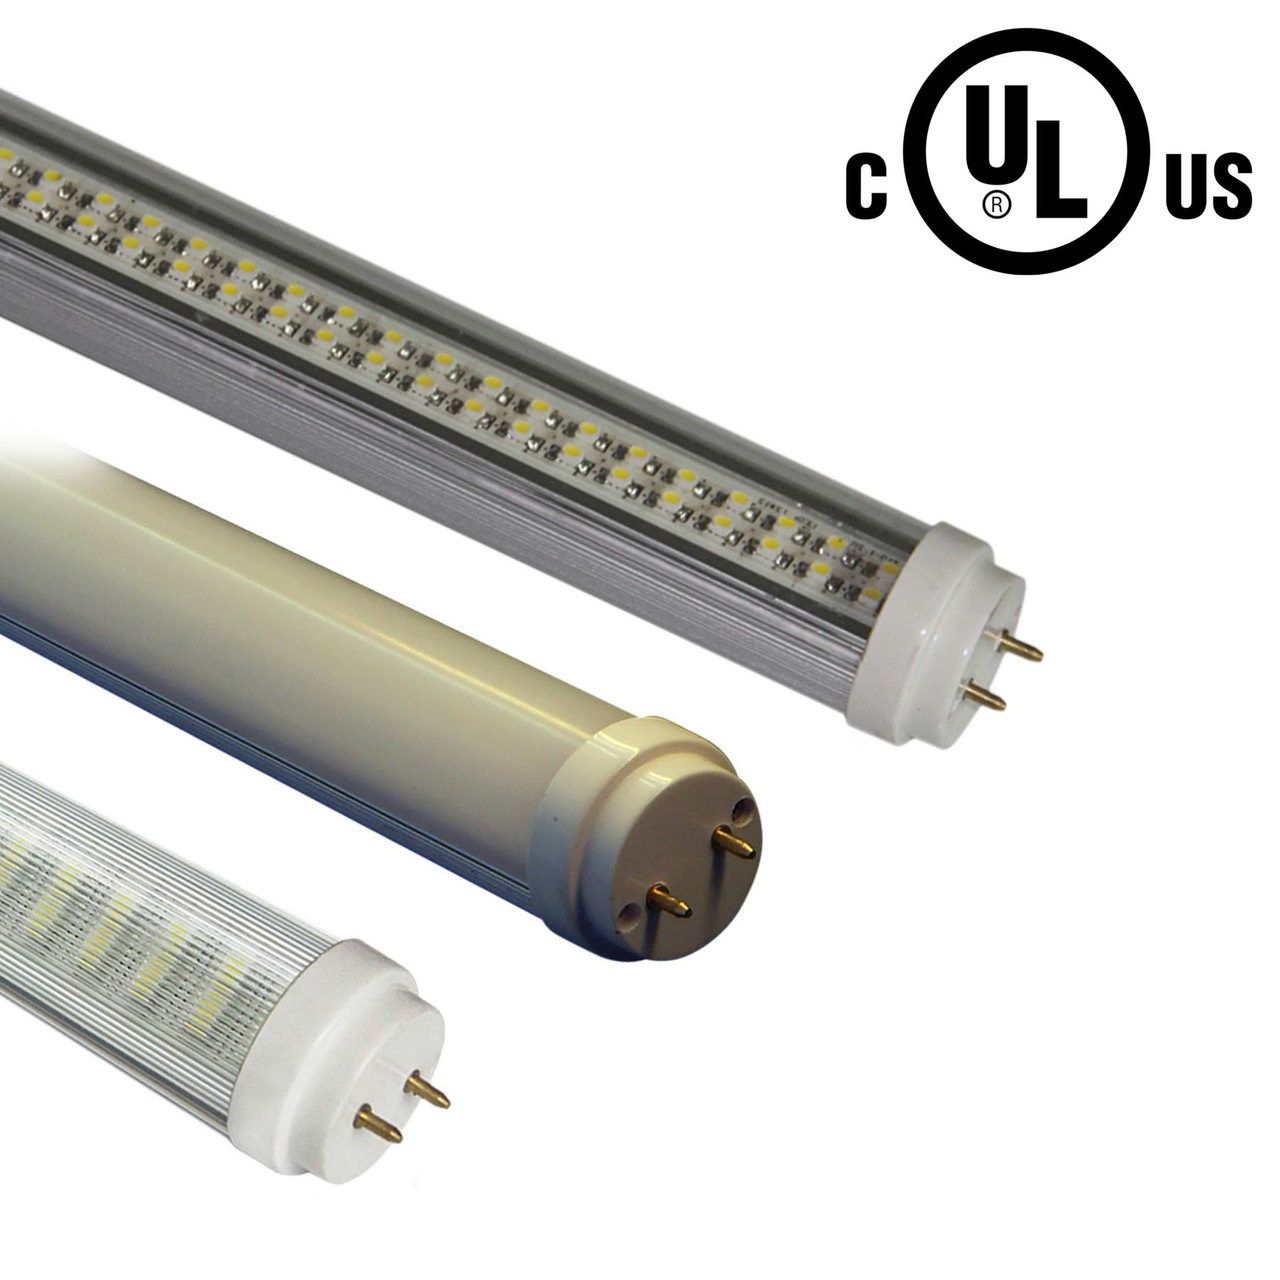 T10 LED Tube Lamp from Signcomplex — LED professional - LED